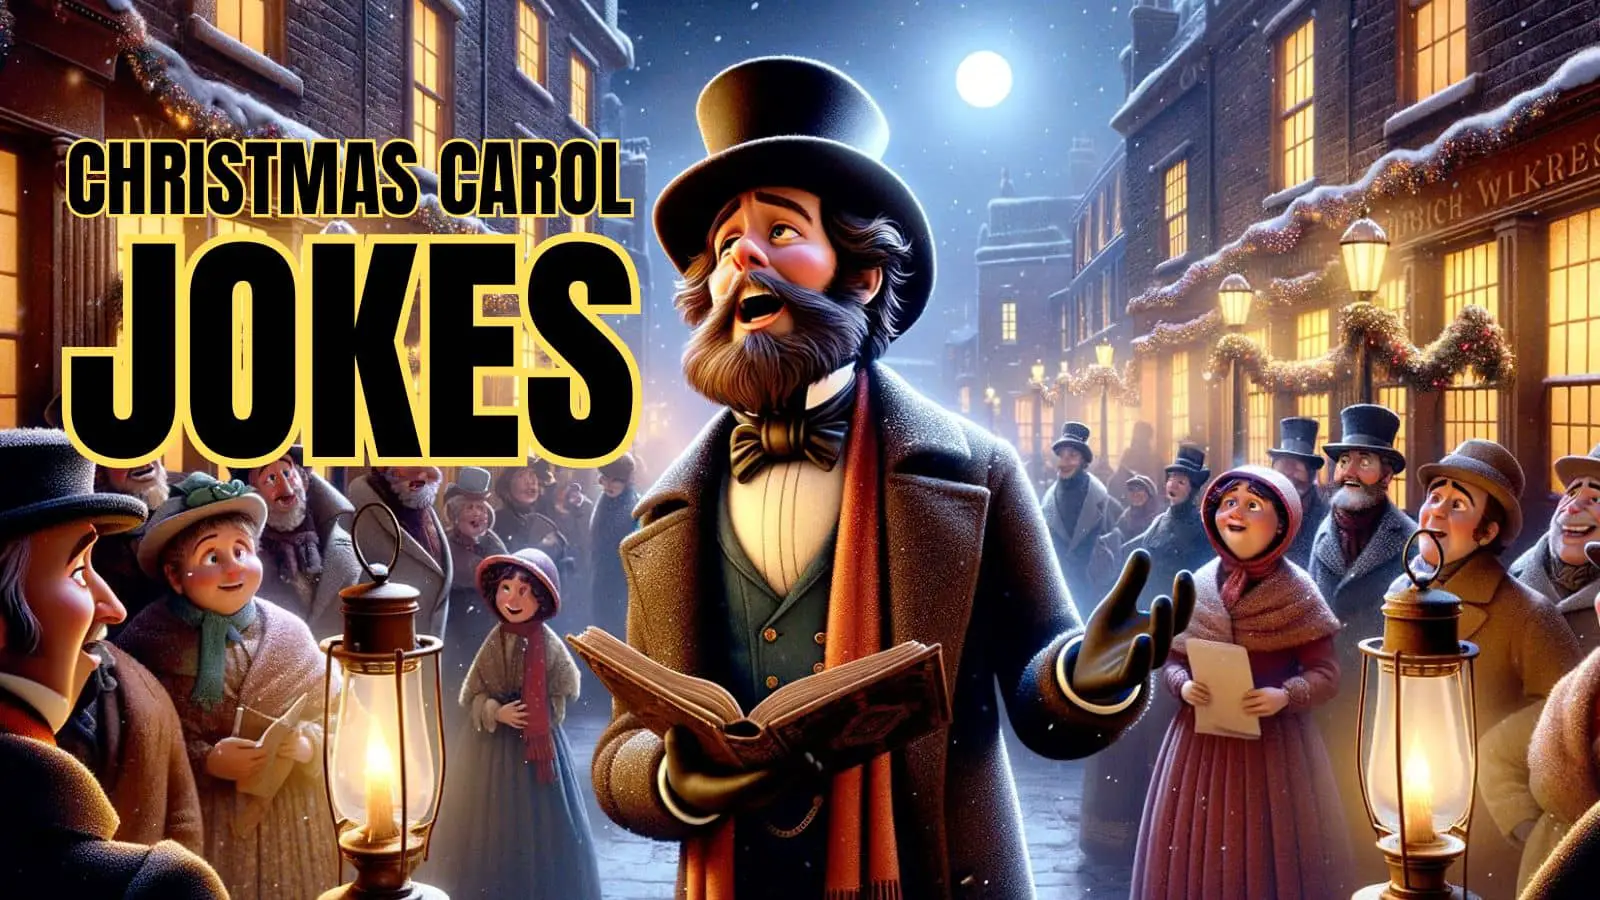 Funny Christmas Carol Jokes on Charles Dickens